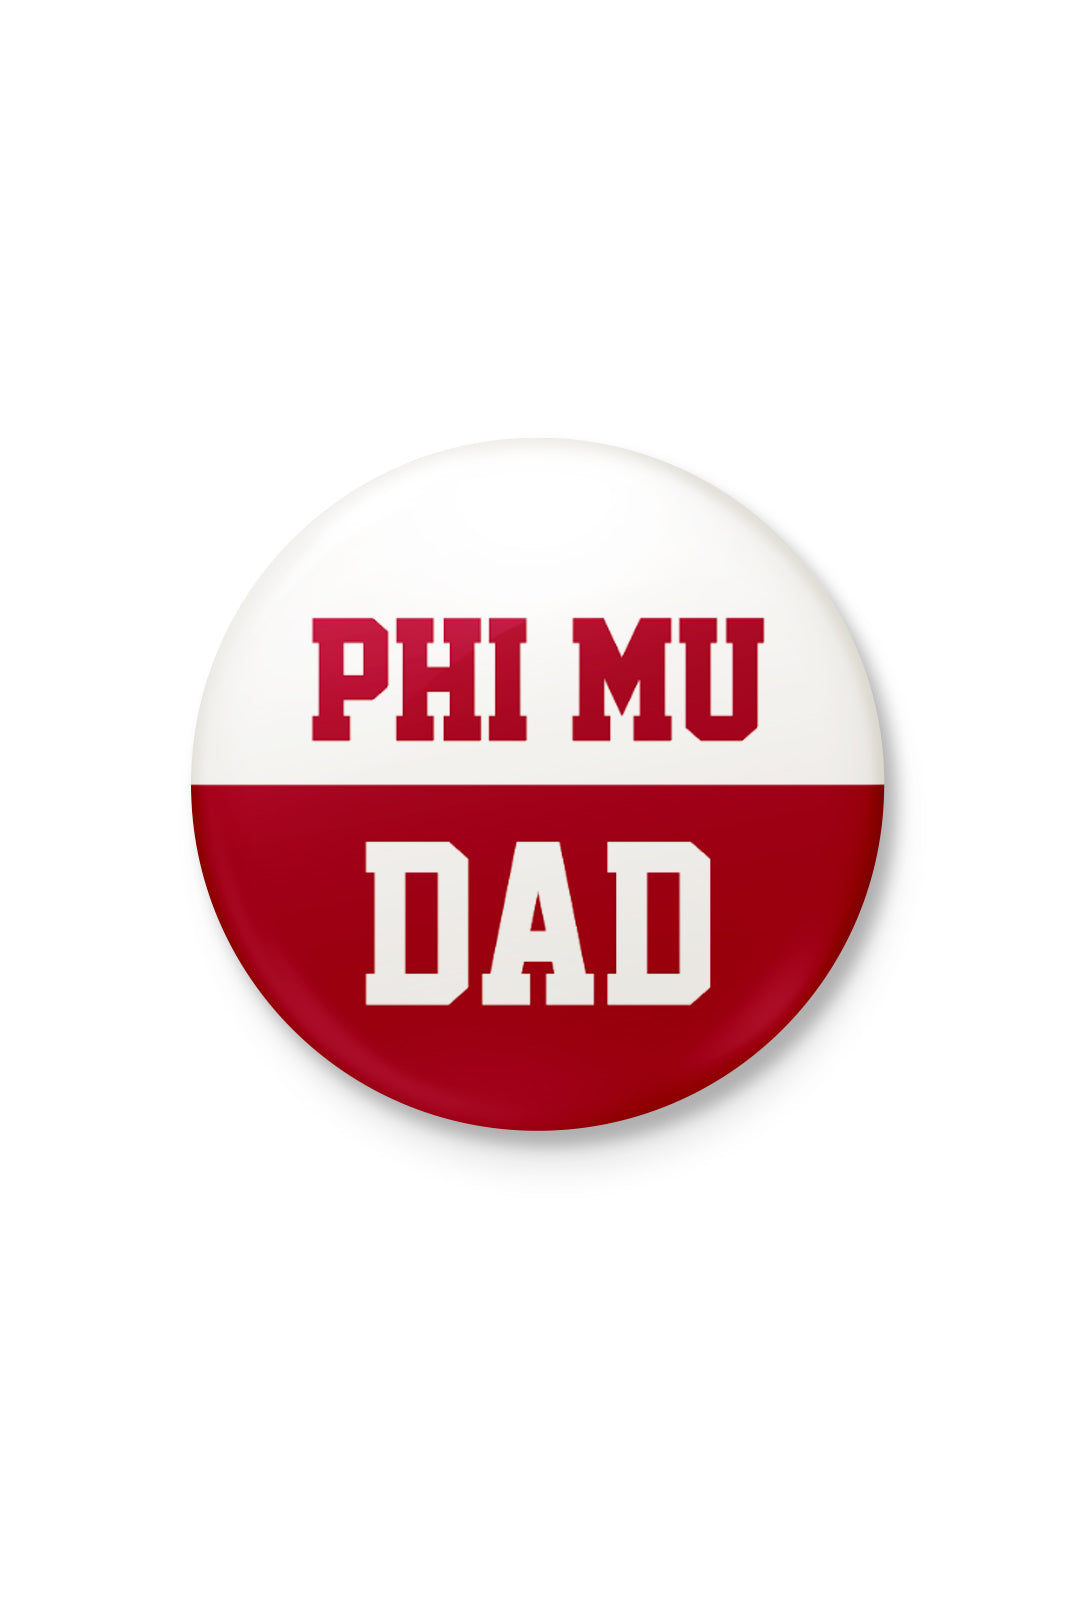 Phi Mu Dad Button